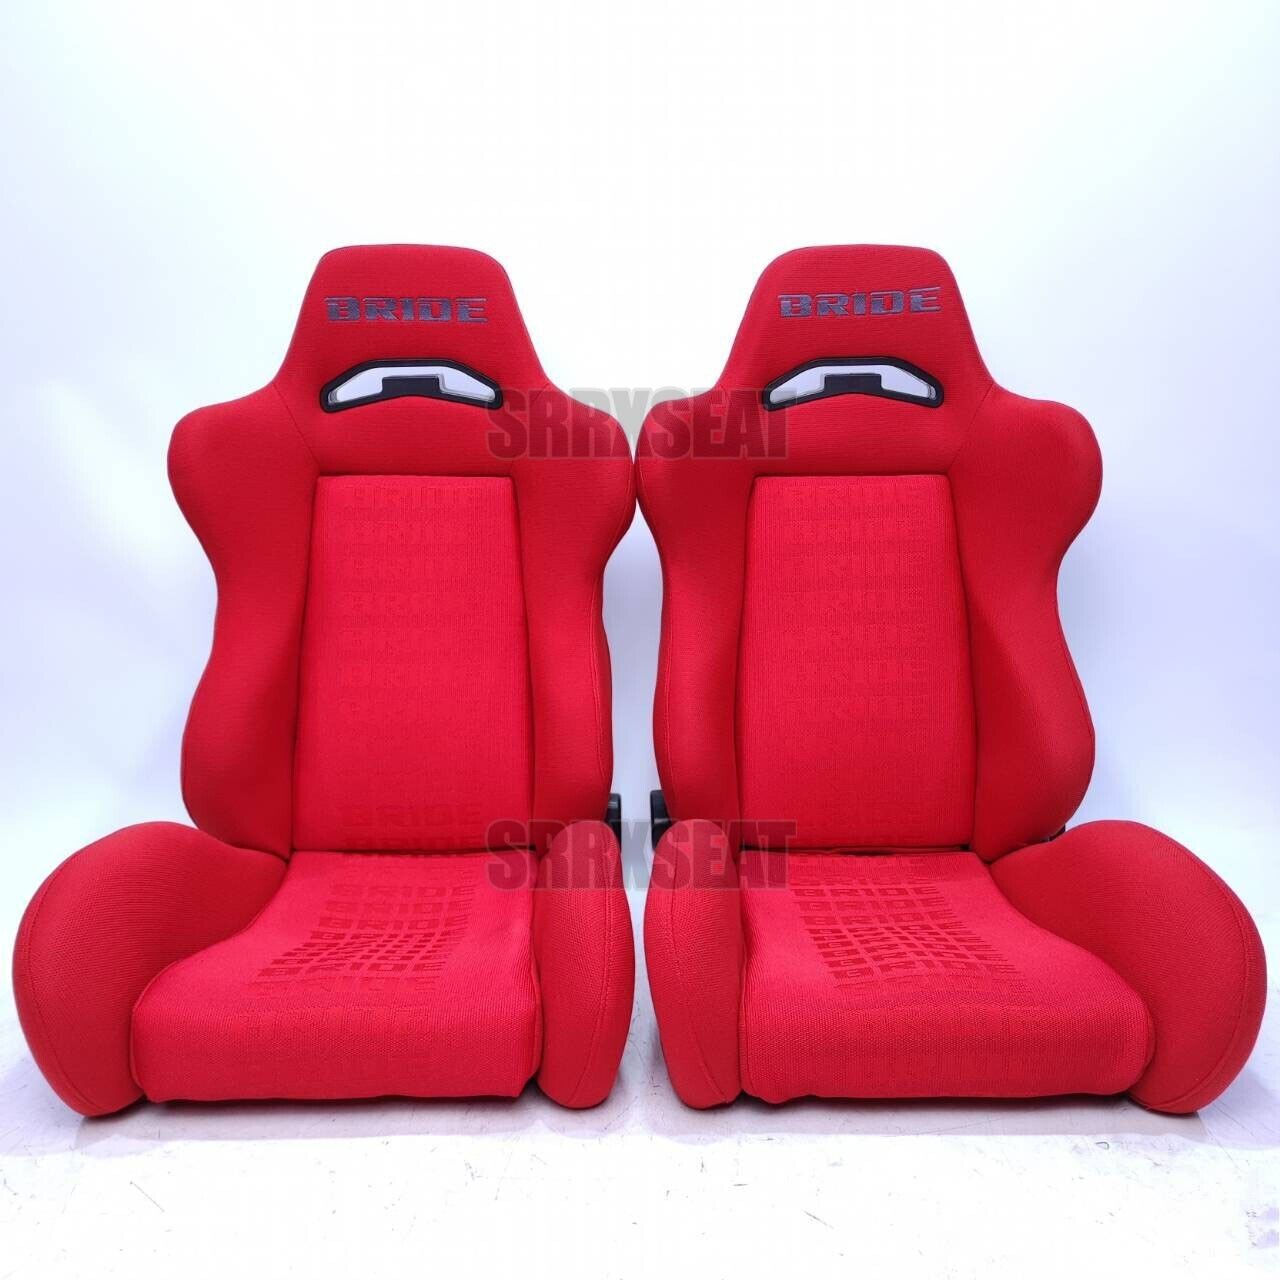 【1 PAIR】AUTHENTIC BRIDE SEATS BRIX 1.5 RED GOOD CONDITION【US LOCATION】